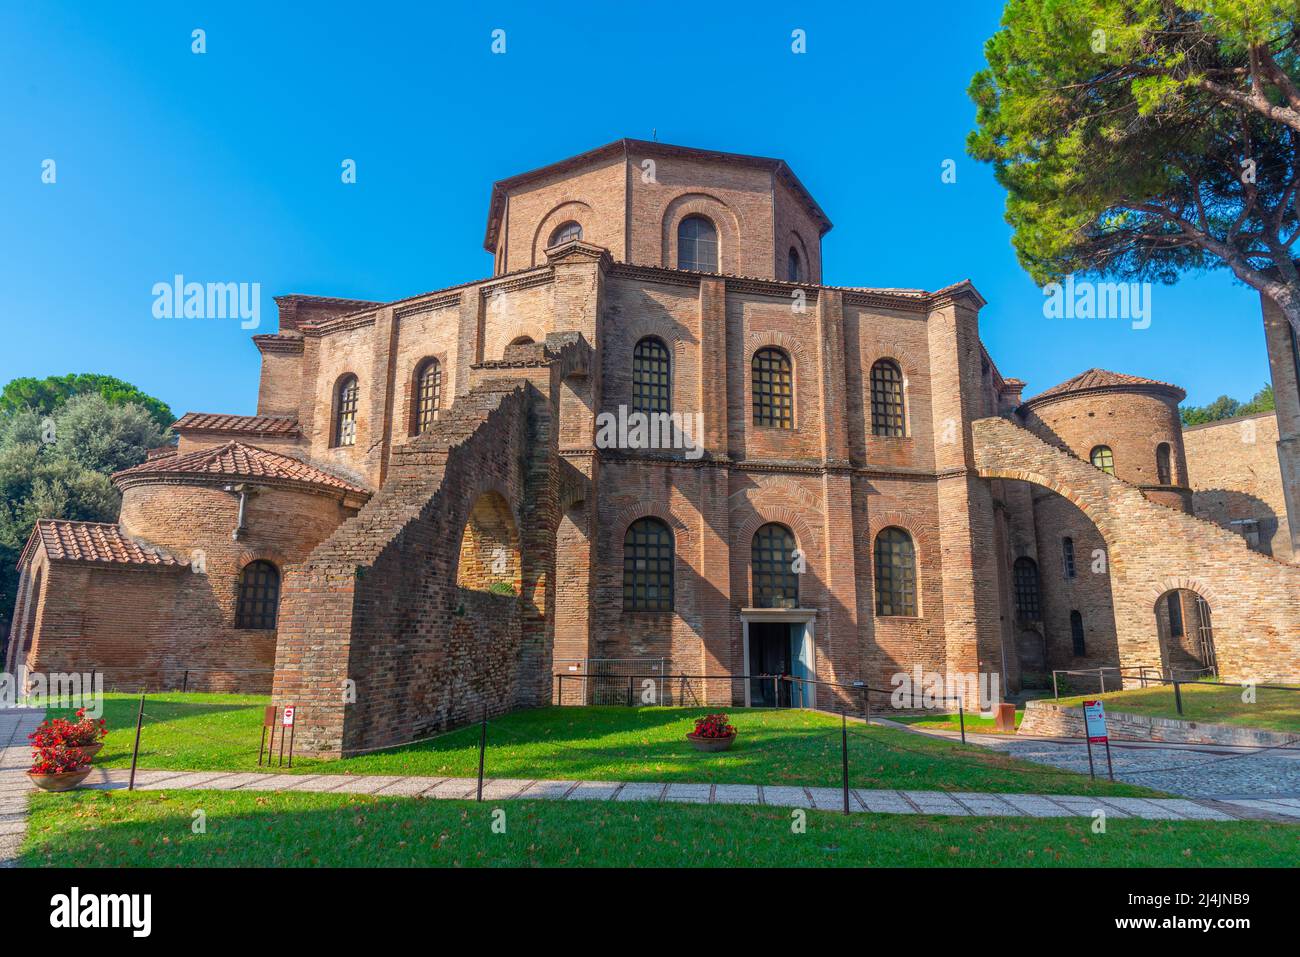 Basilica di San Vitale in Ravenna, Italy. Stock Photo